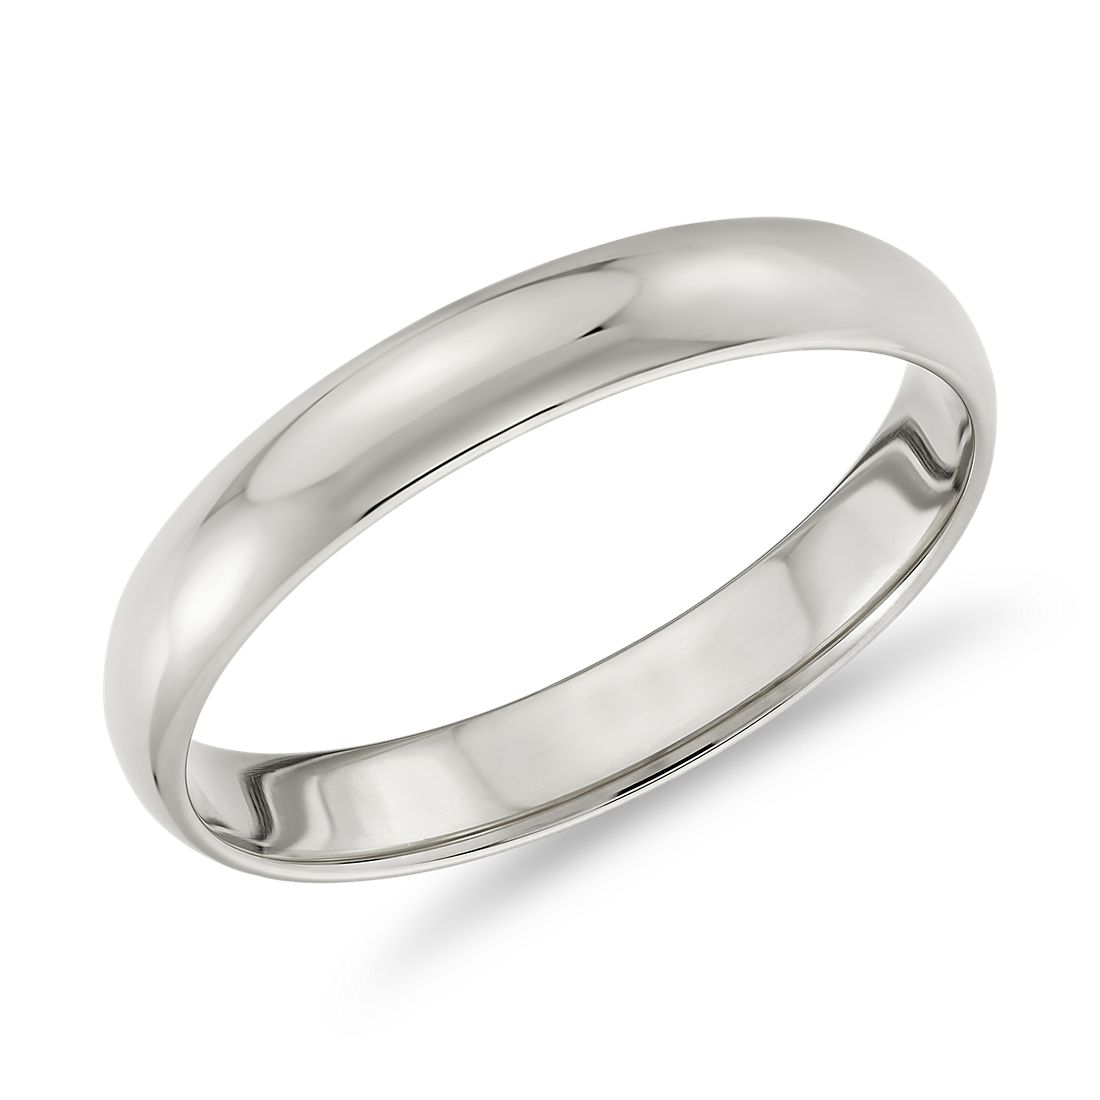 ZenJewels Plain Comfort Fit Wedding Band Solid 14k White Gold Ring Polished Finish 3 mm